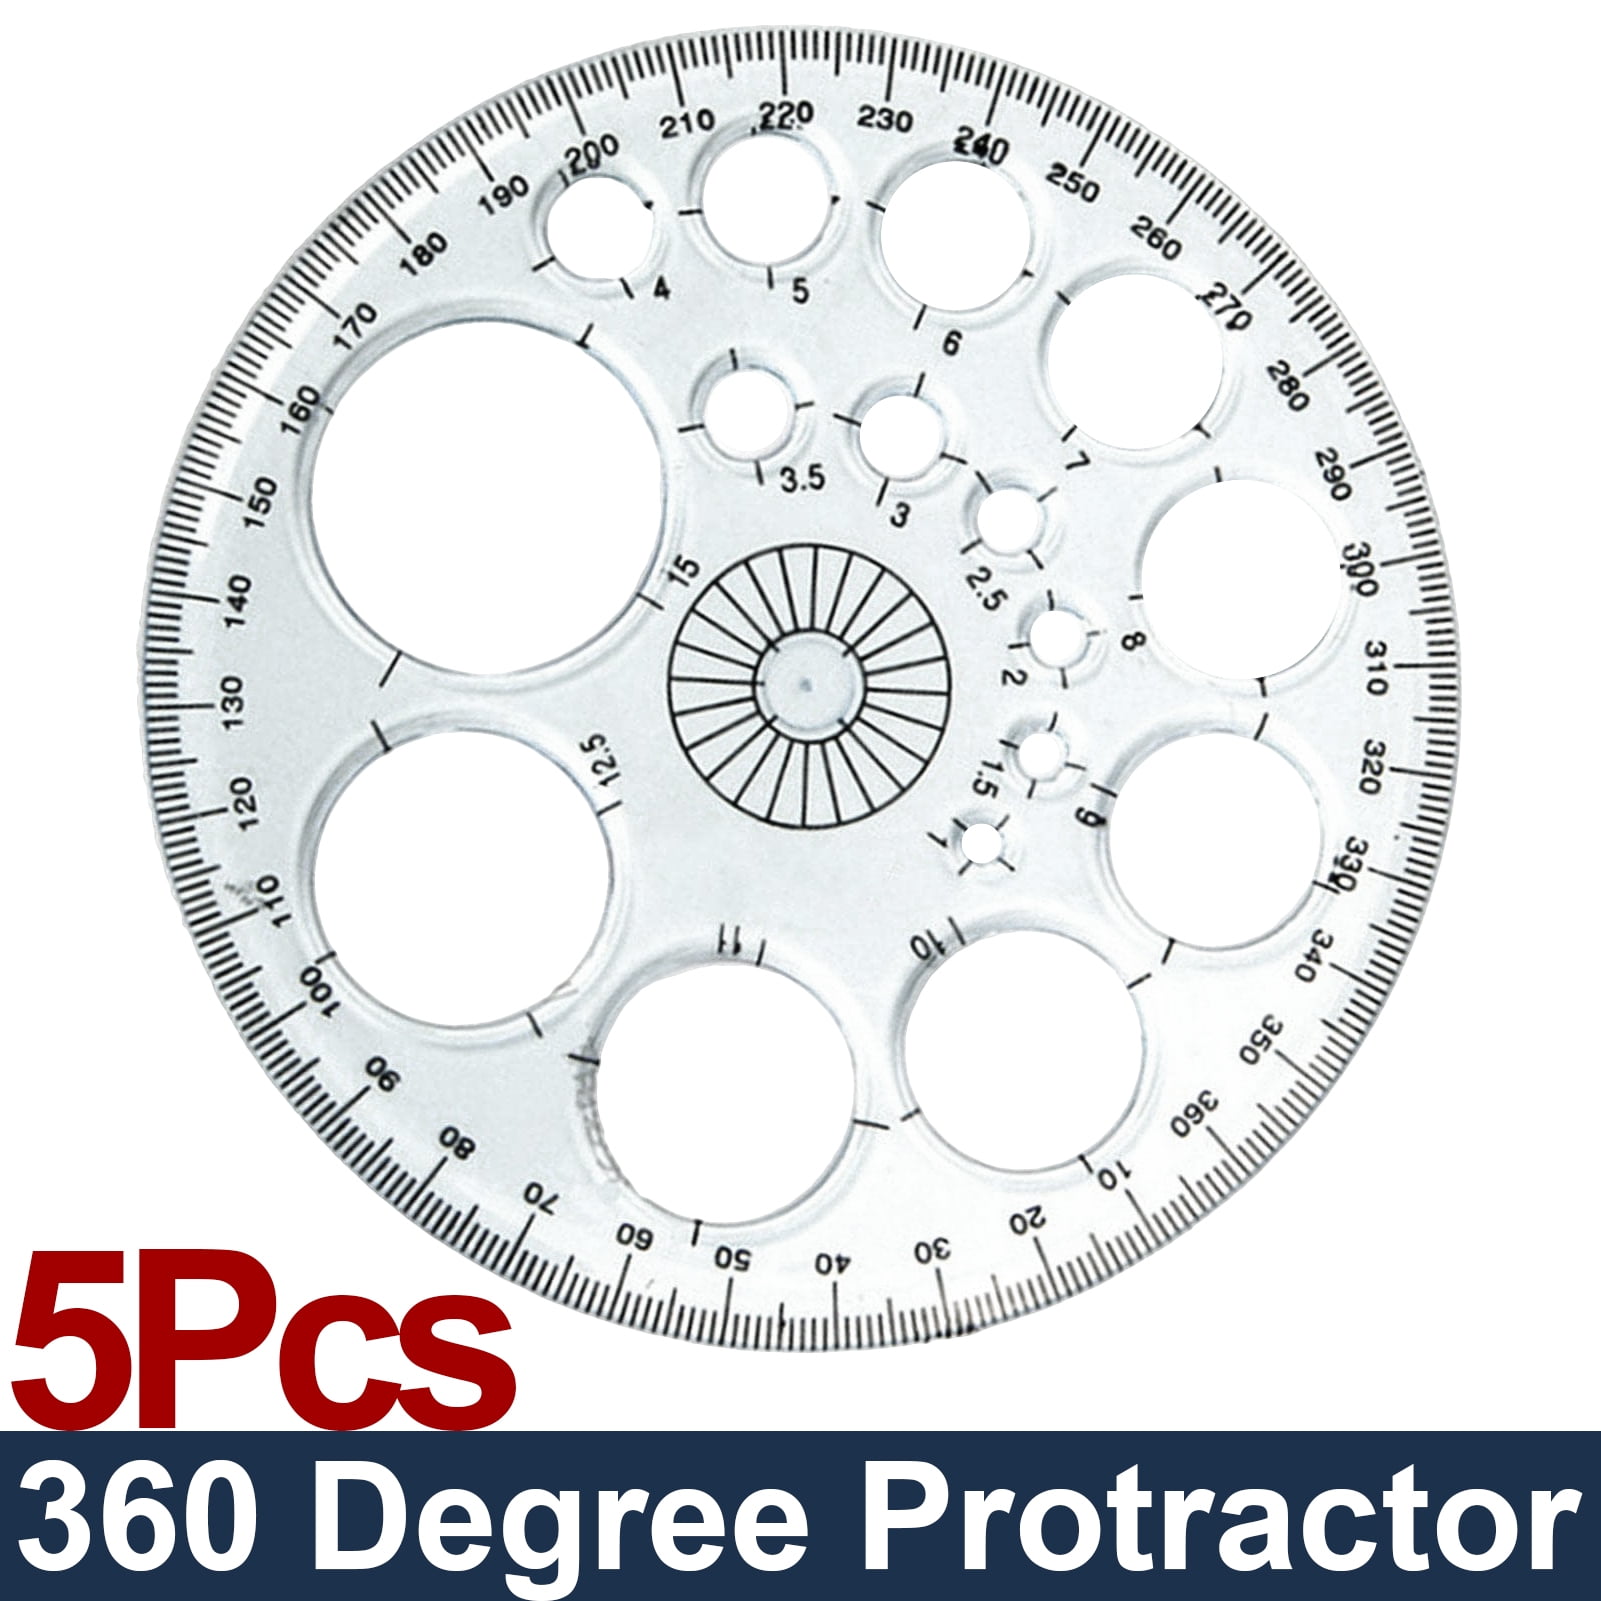 Baluue 5Pcs Angle and Circle Maker 360 Degree Protractor Circle Protractor Ruler Drafting Tools 